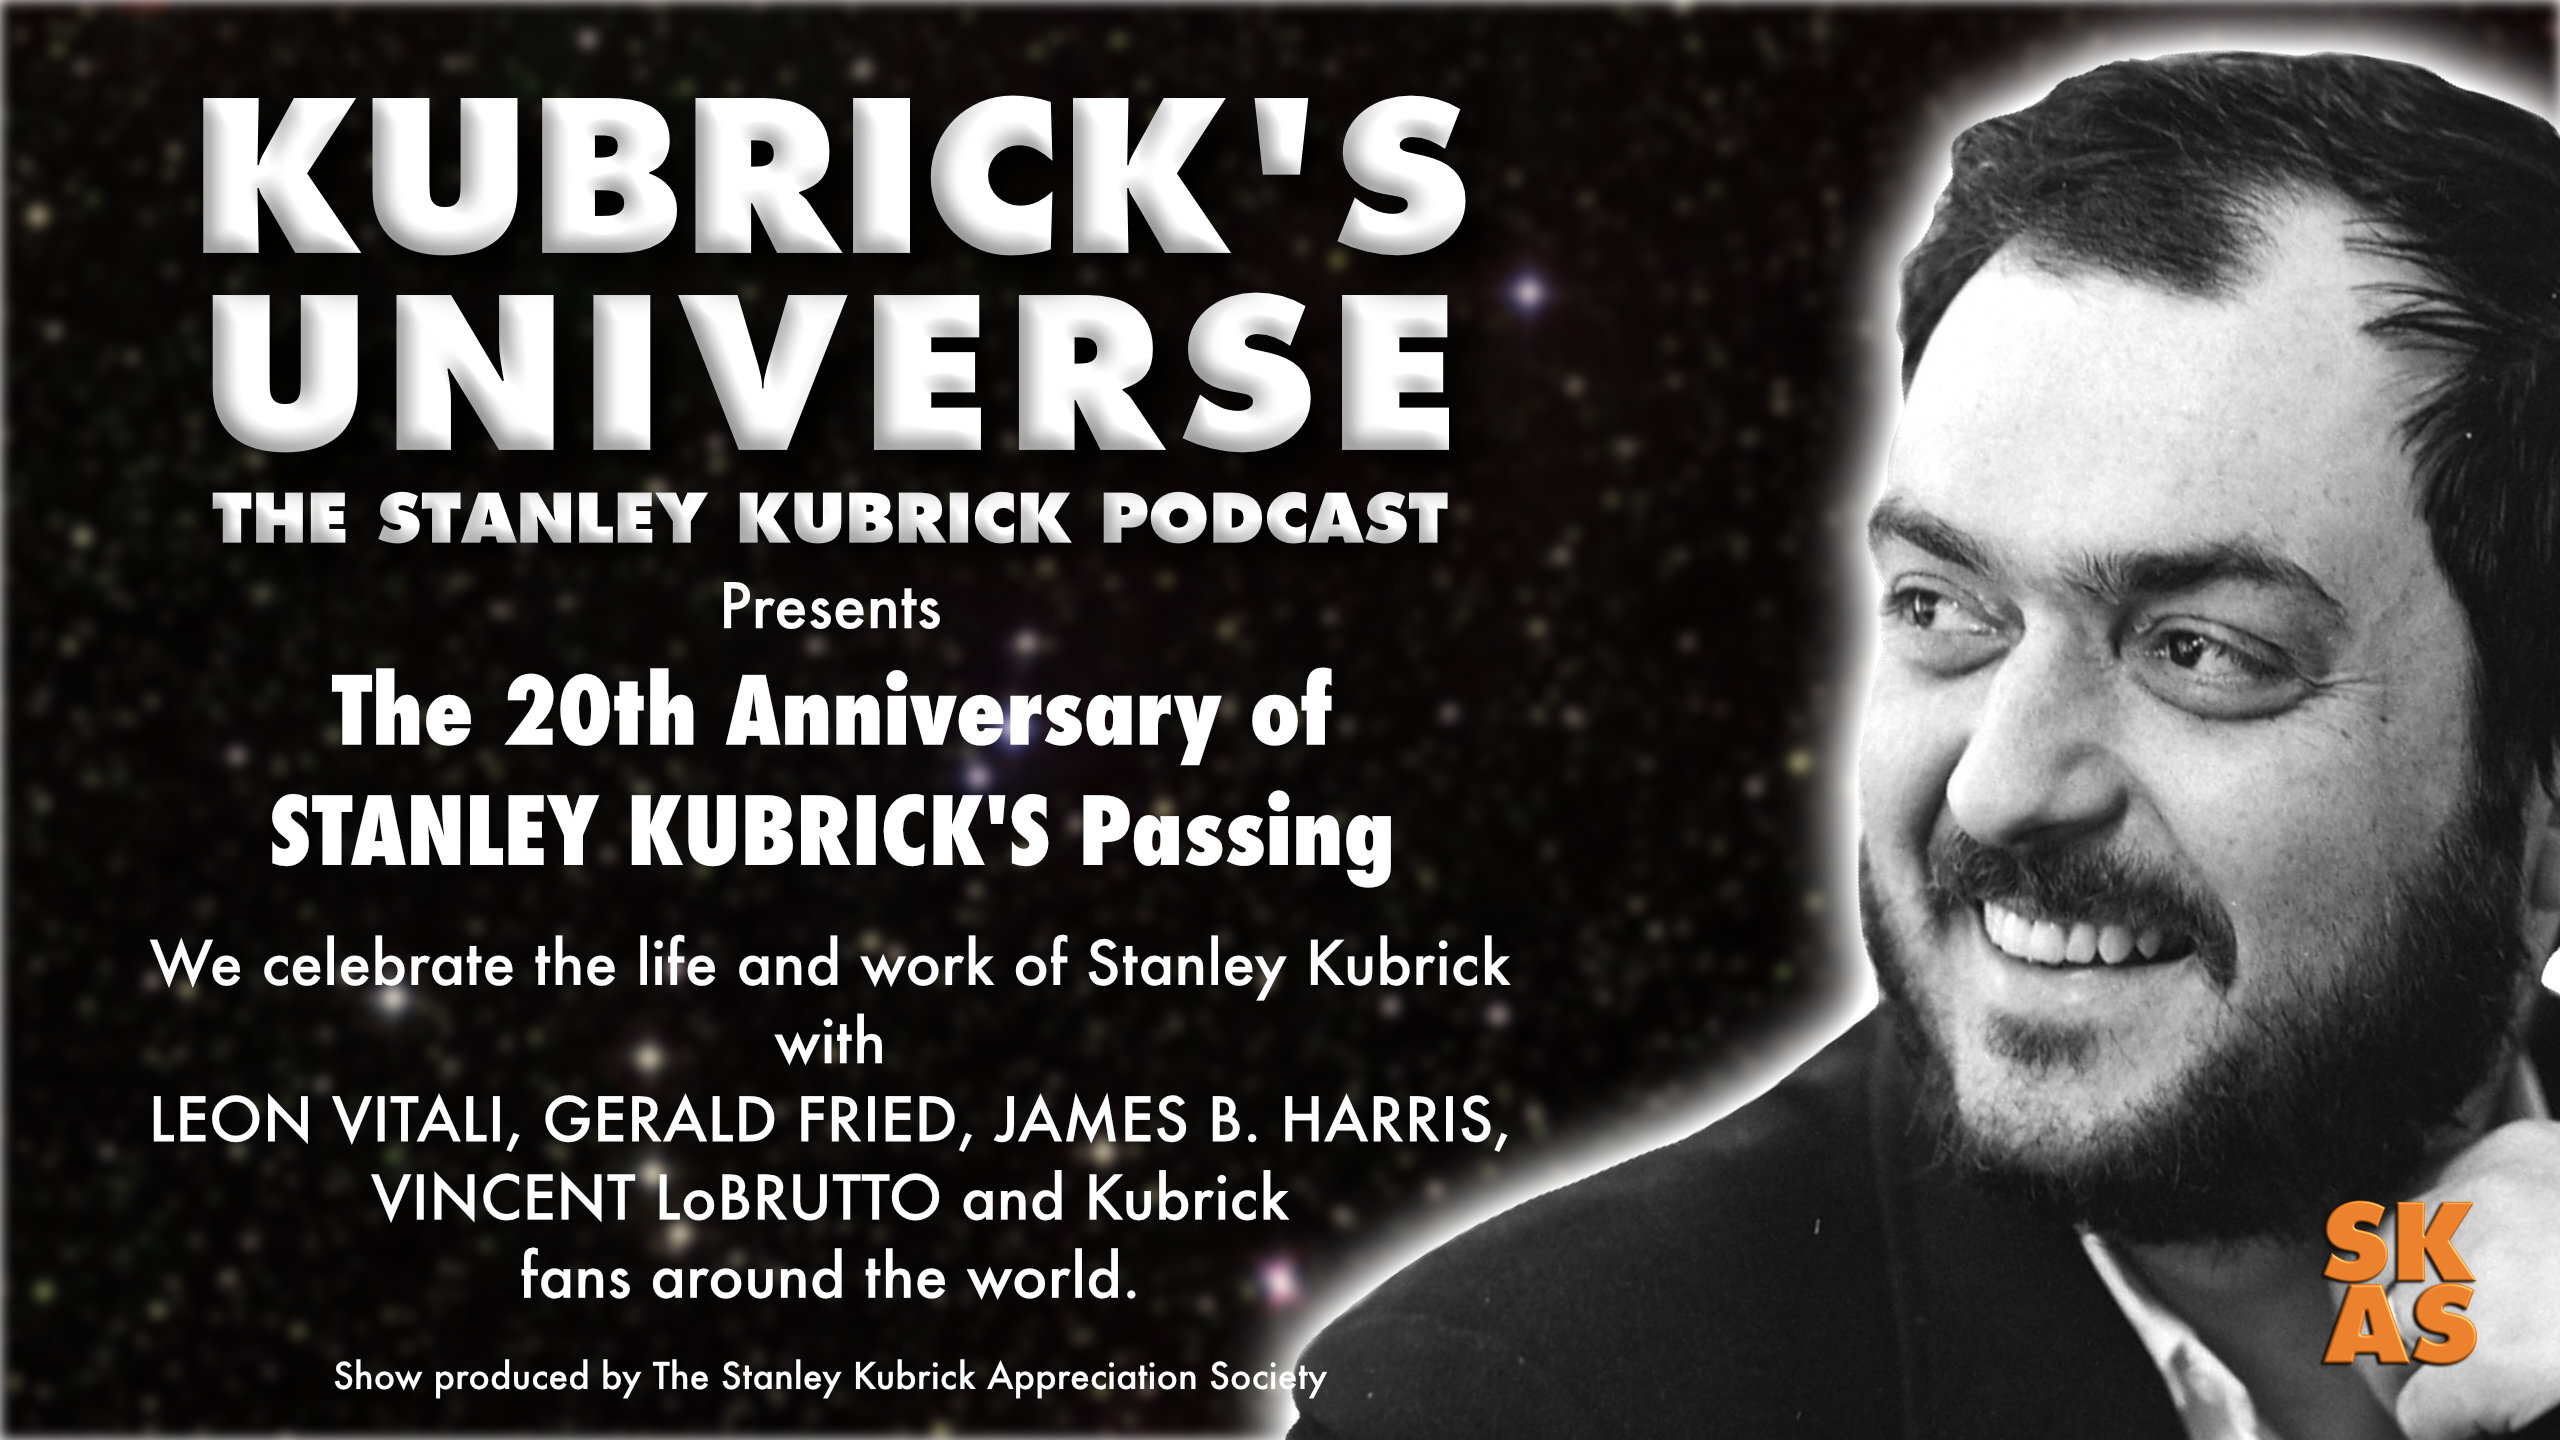 SKAS_Kubrick_s_Universe_Episode_Adverts_Ep23.jpg